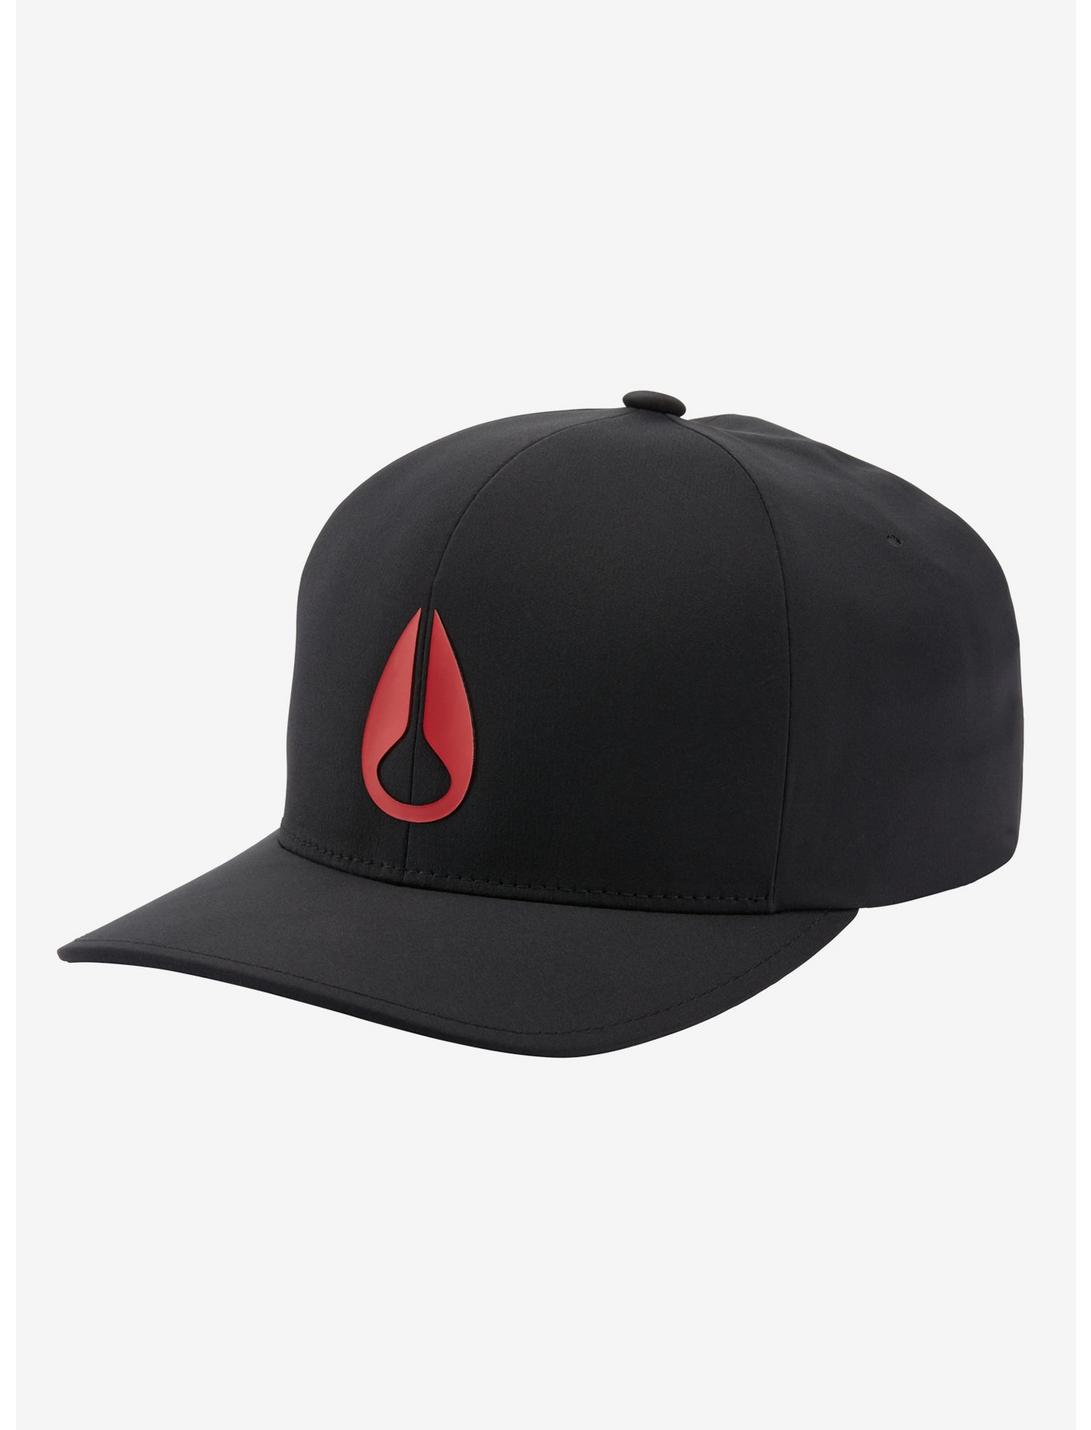 Nixon Arroyo Black x Red Hat, BLACK, hi-res